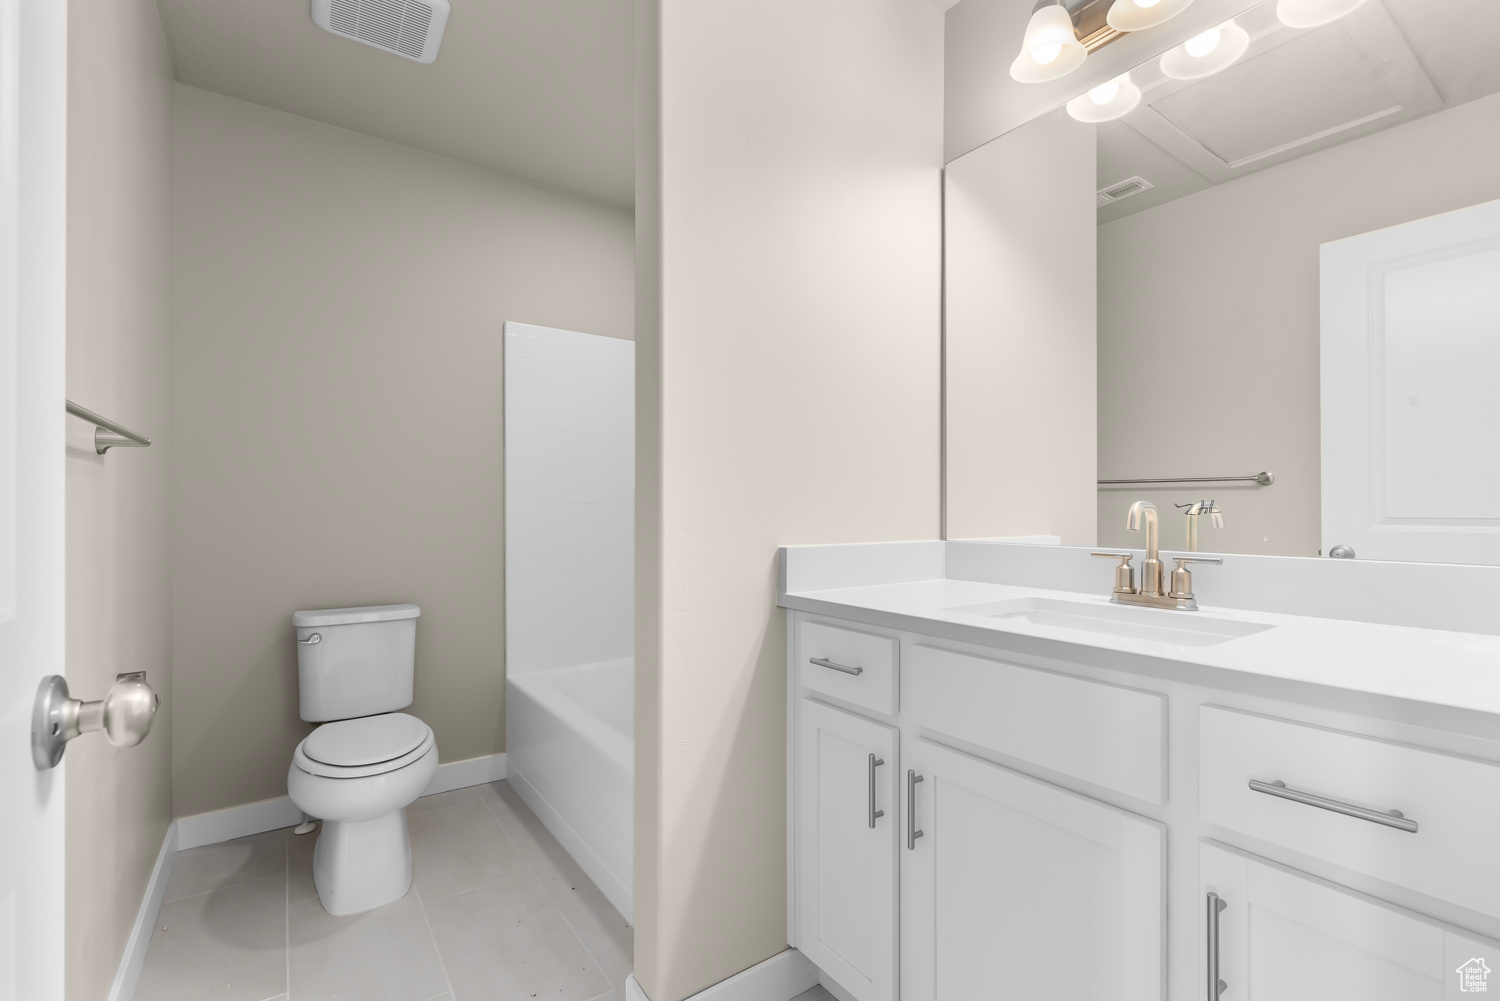 Full bathroom with tile floors, washtub / shower combination, toilet, and vanity